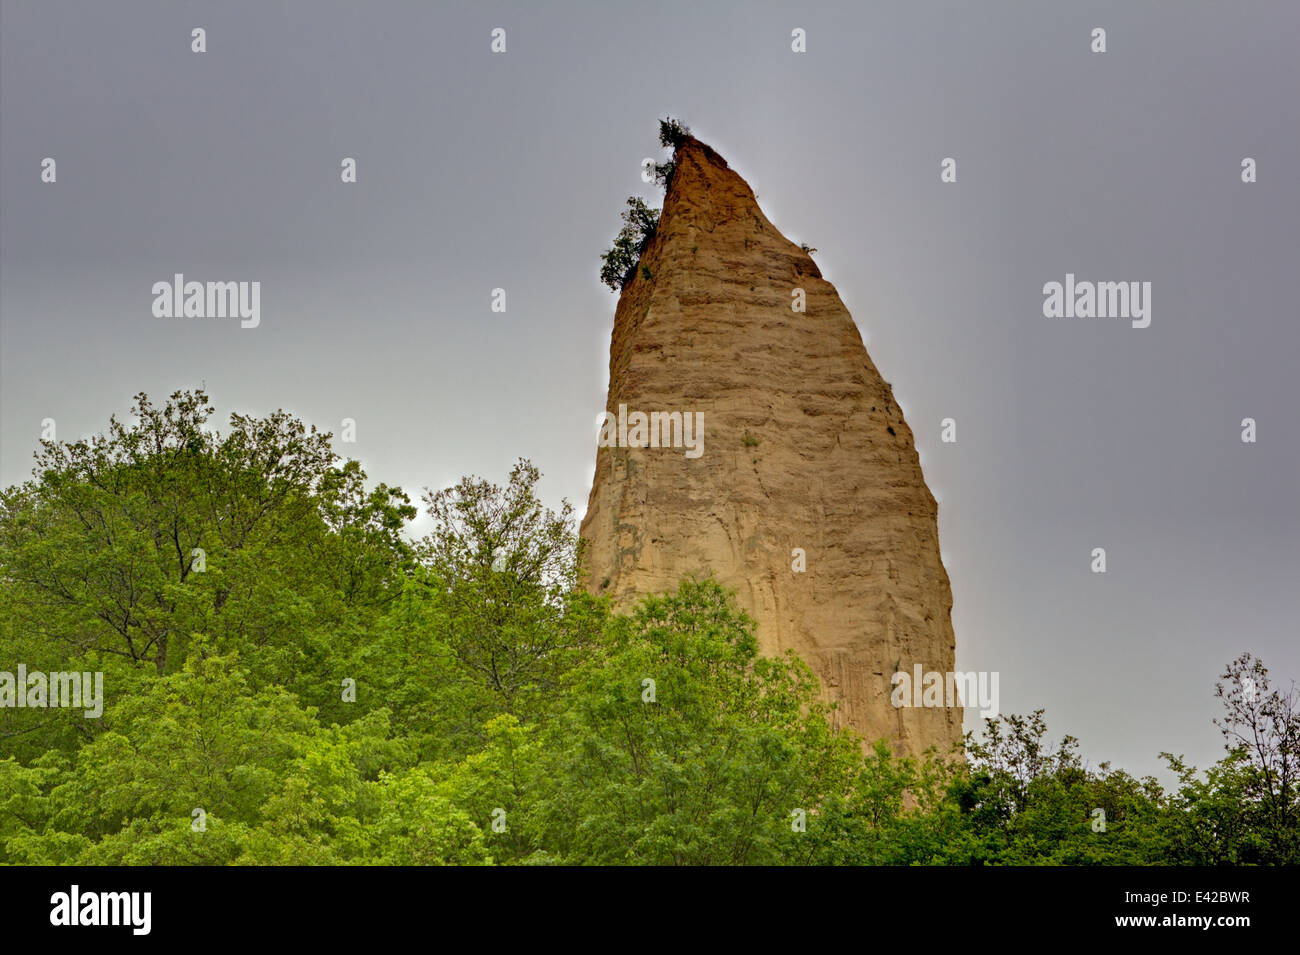 Spire-förmigen Berg aus Sandstein in Bulgarien Stockfoto